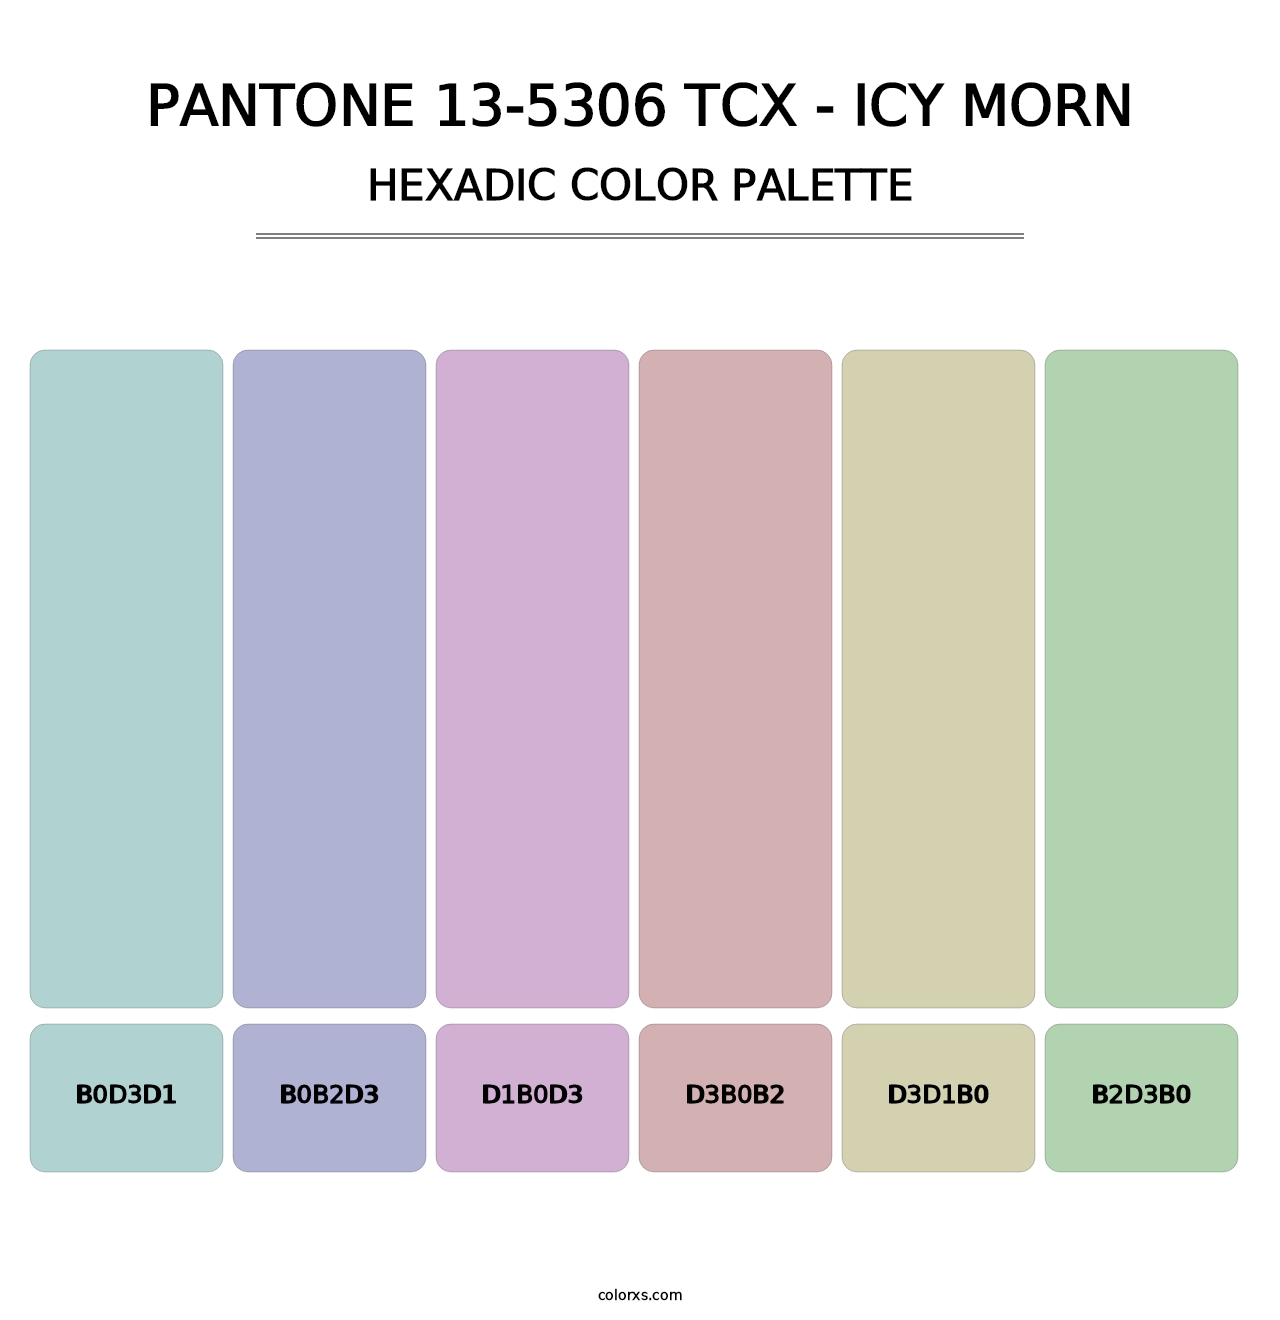 PANTONE 13-5306 TCX - Icy Morn - Hexadic Color Palette